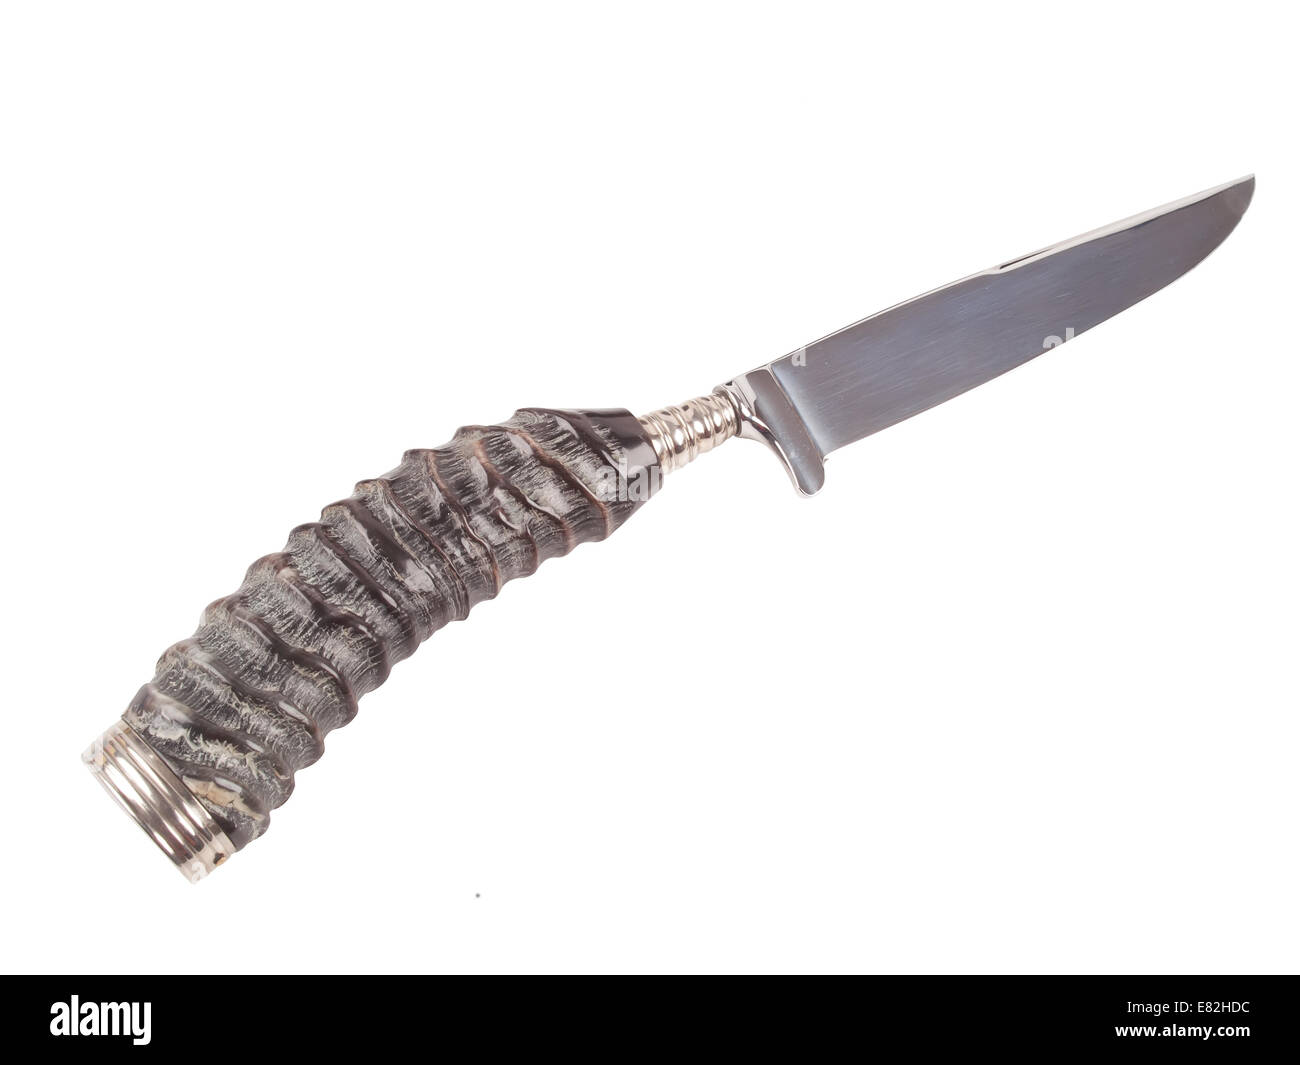 horn handle on knife, isolated on white background Stock Photo